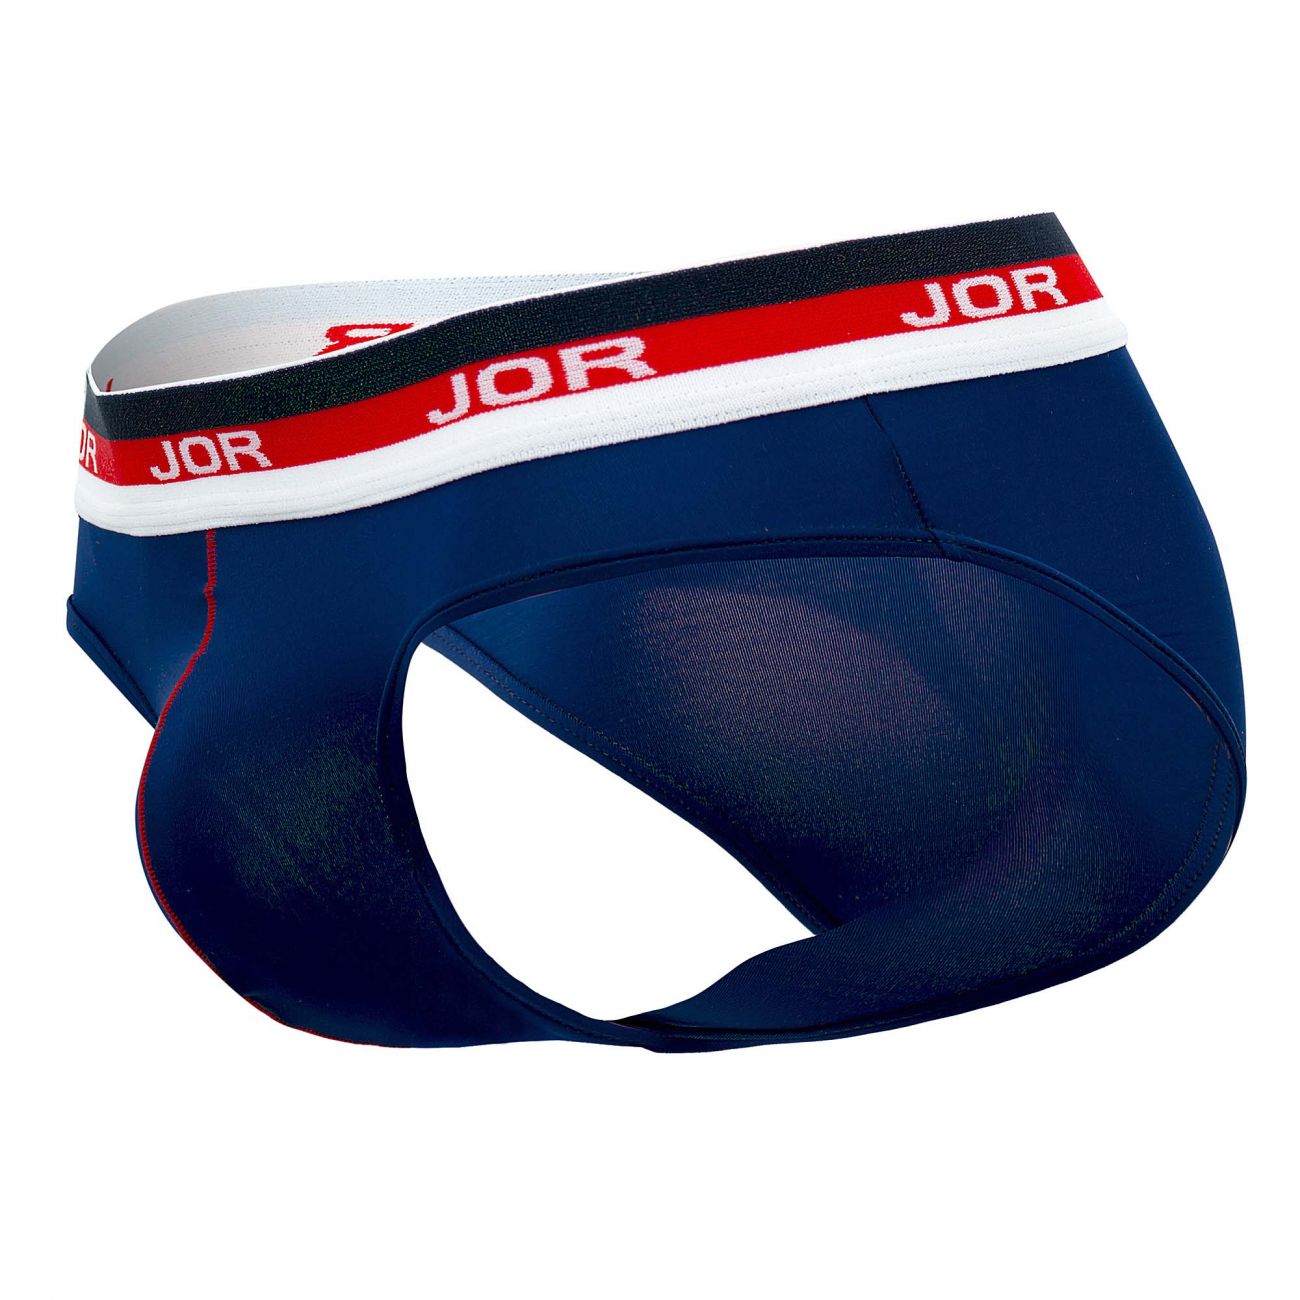 Mens Underwear: JOR 0950 Naval Bikini | eBay